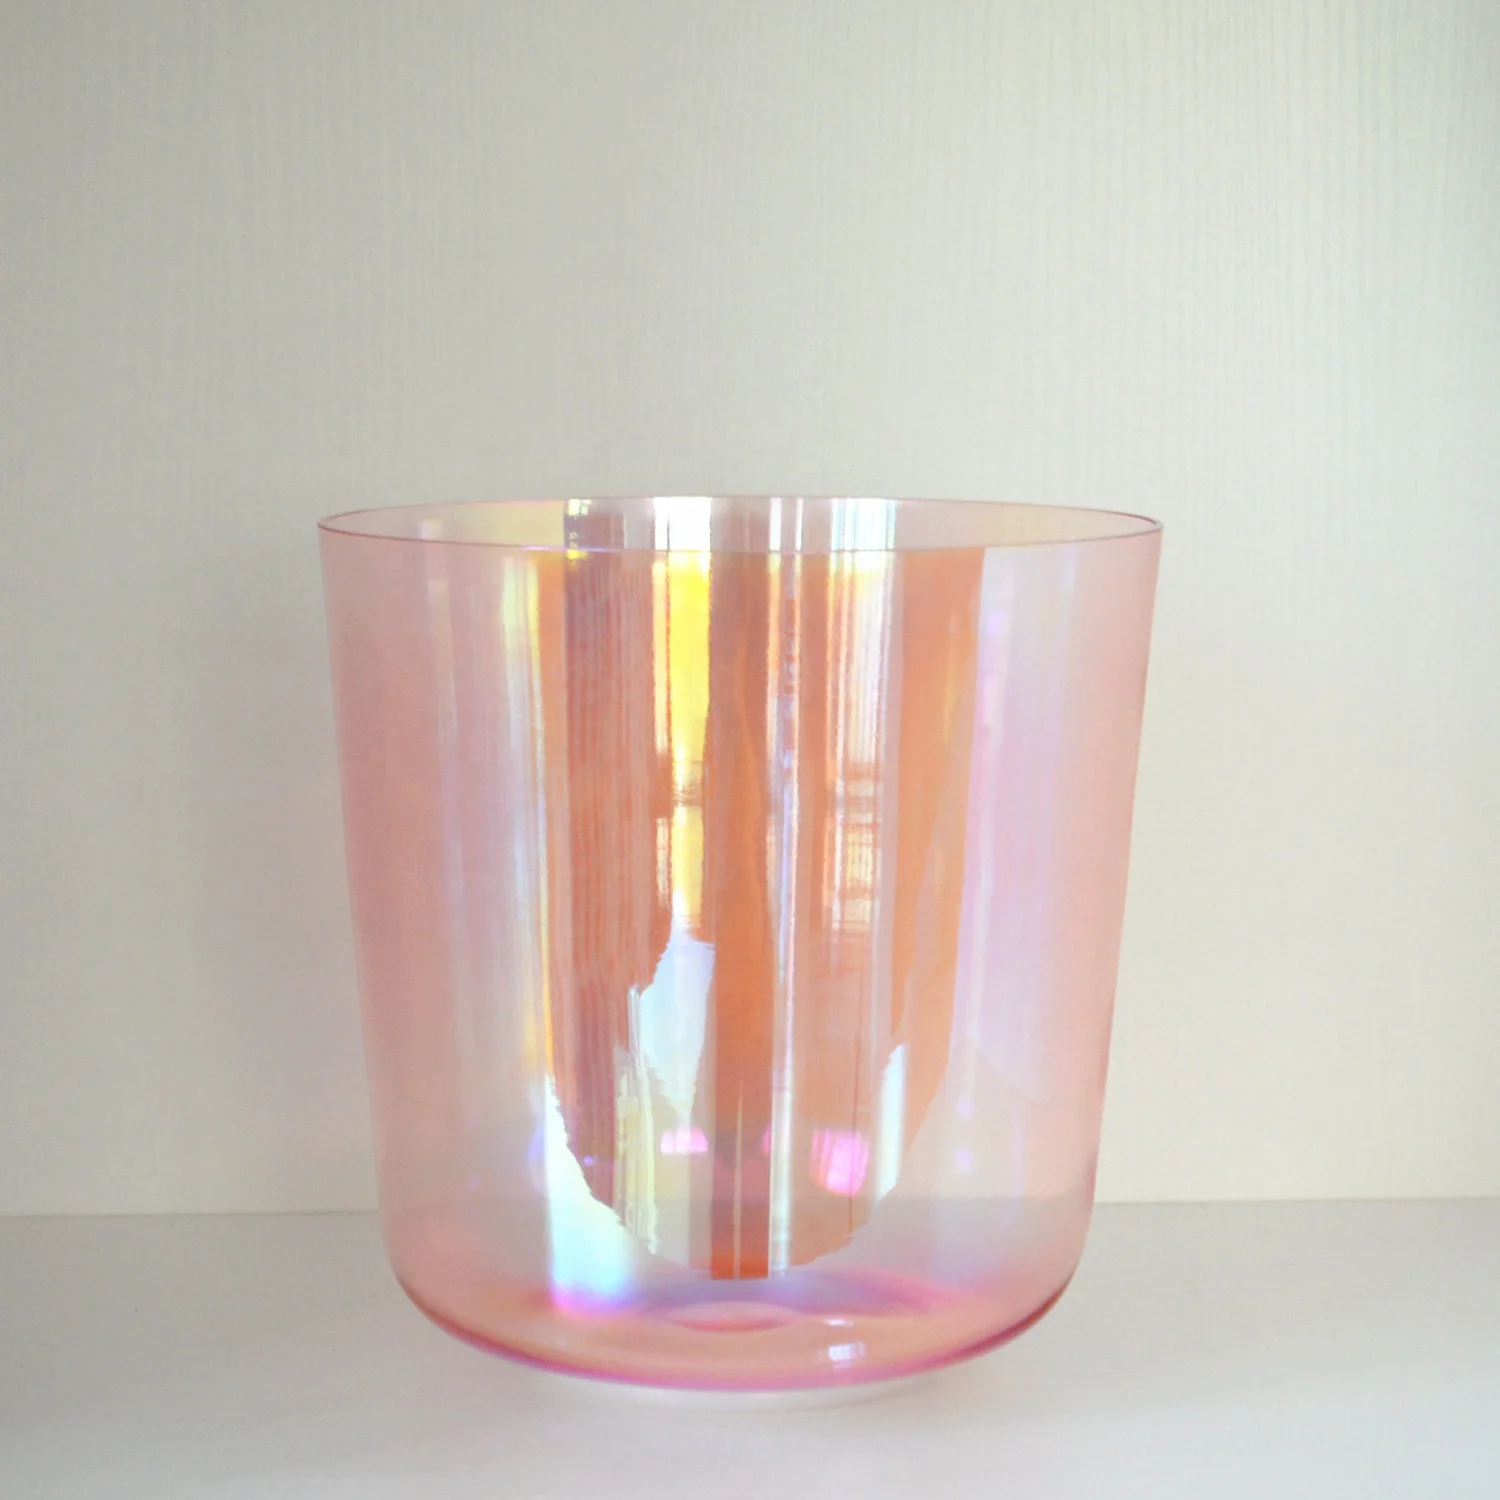 Чаша для пения из розового кварца, 5-12 дюймов